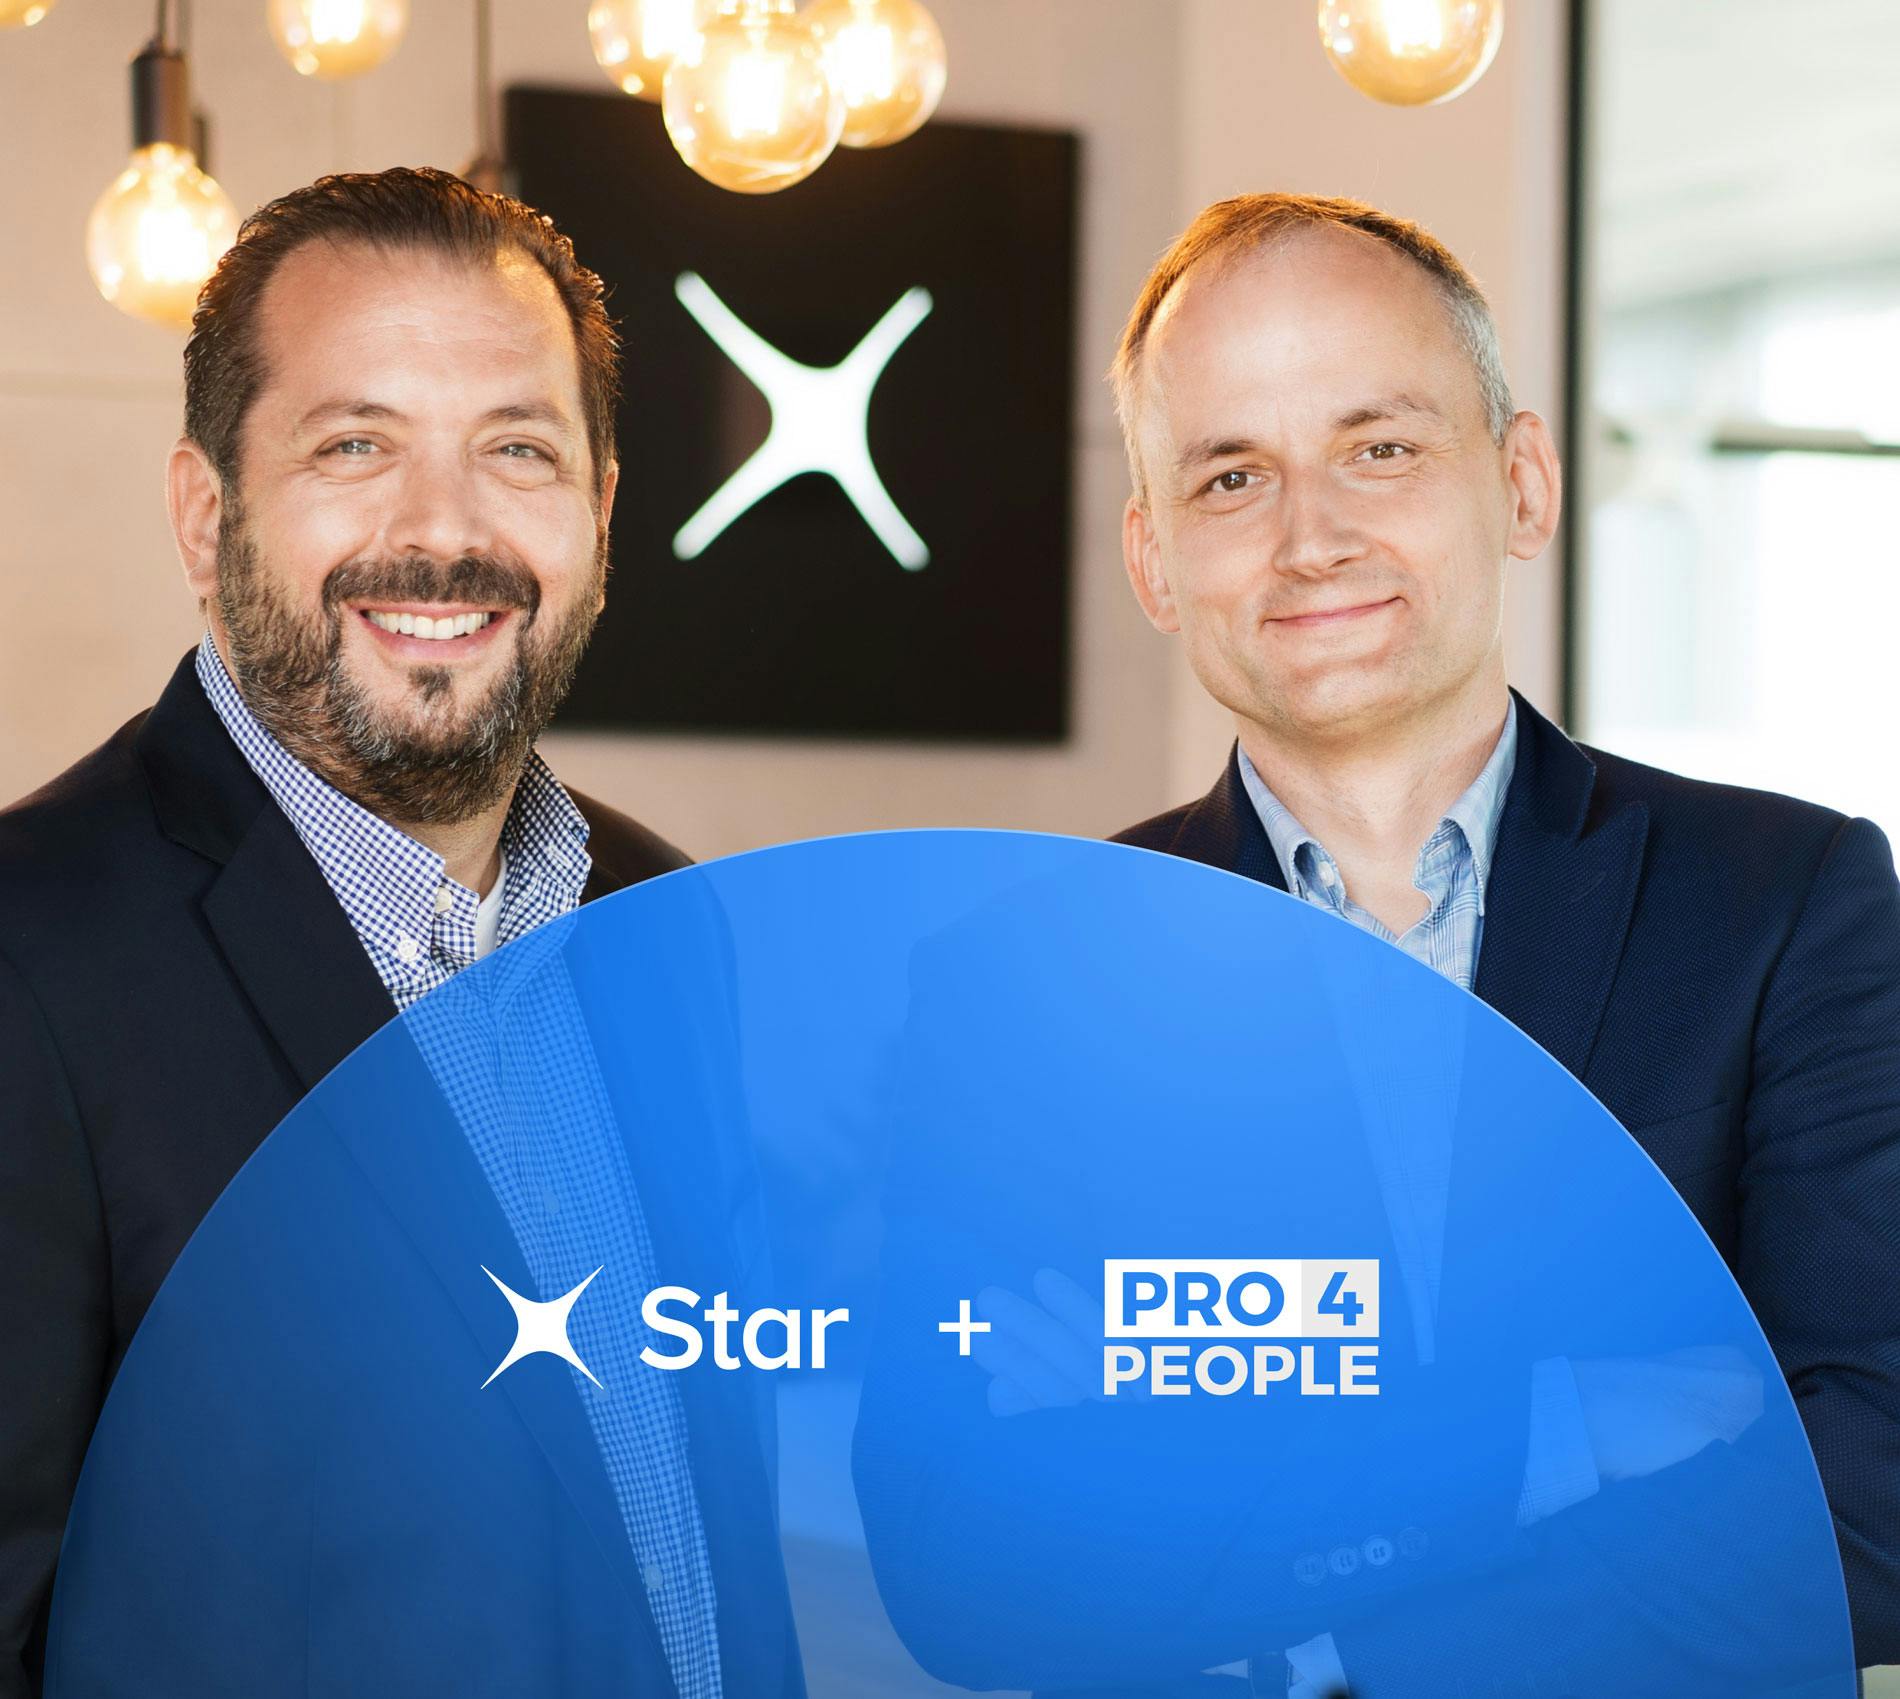 Star - Pro 4 People